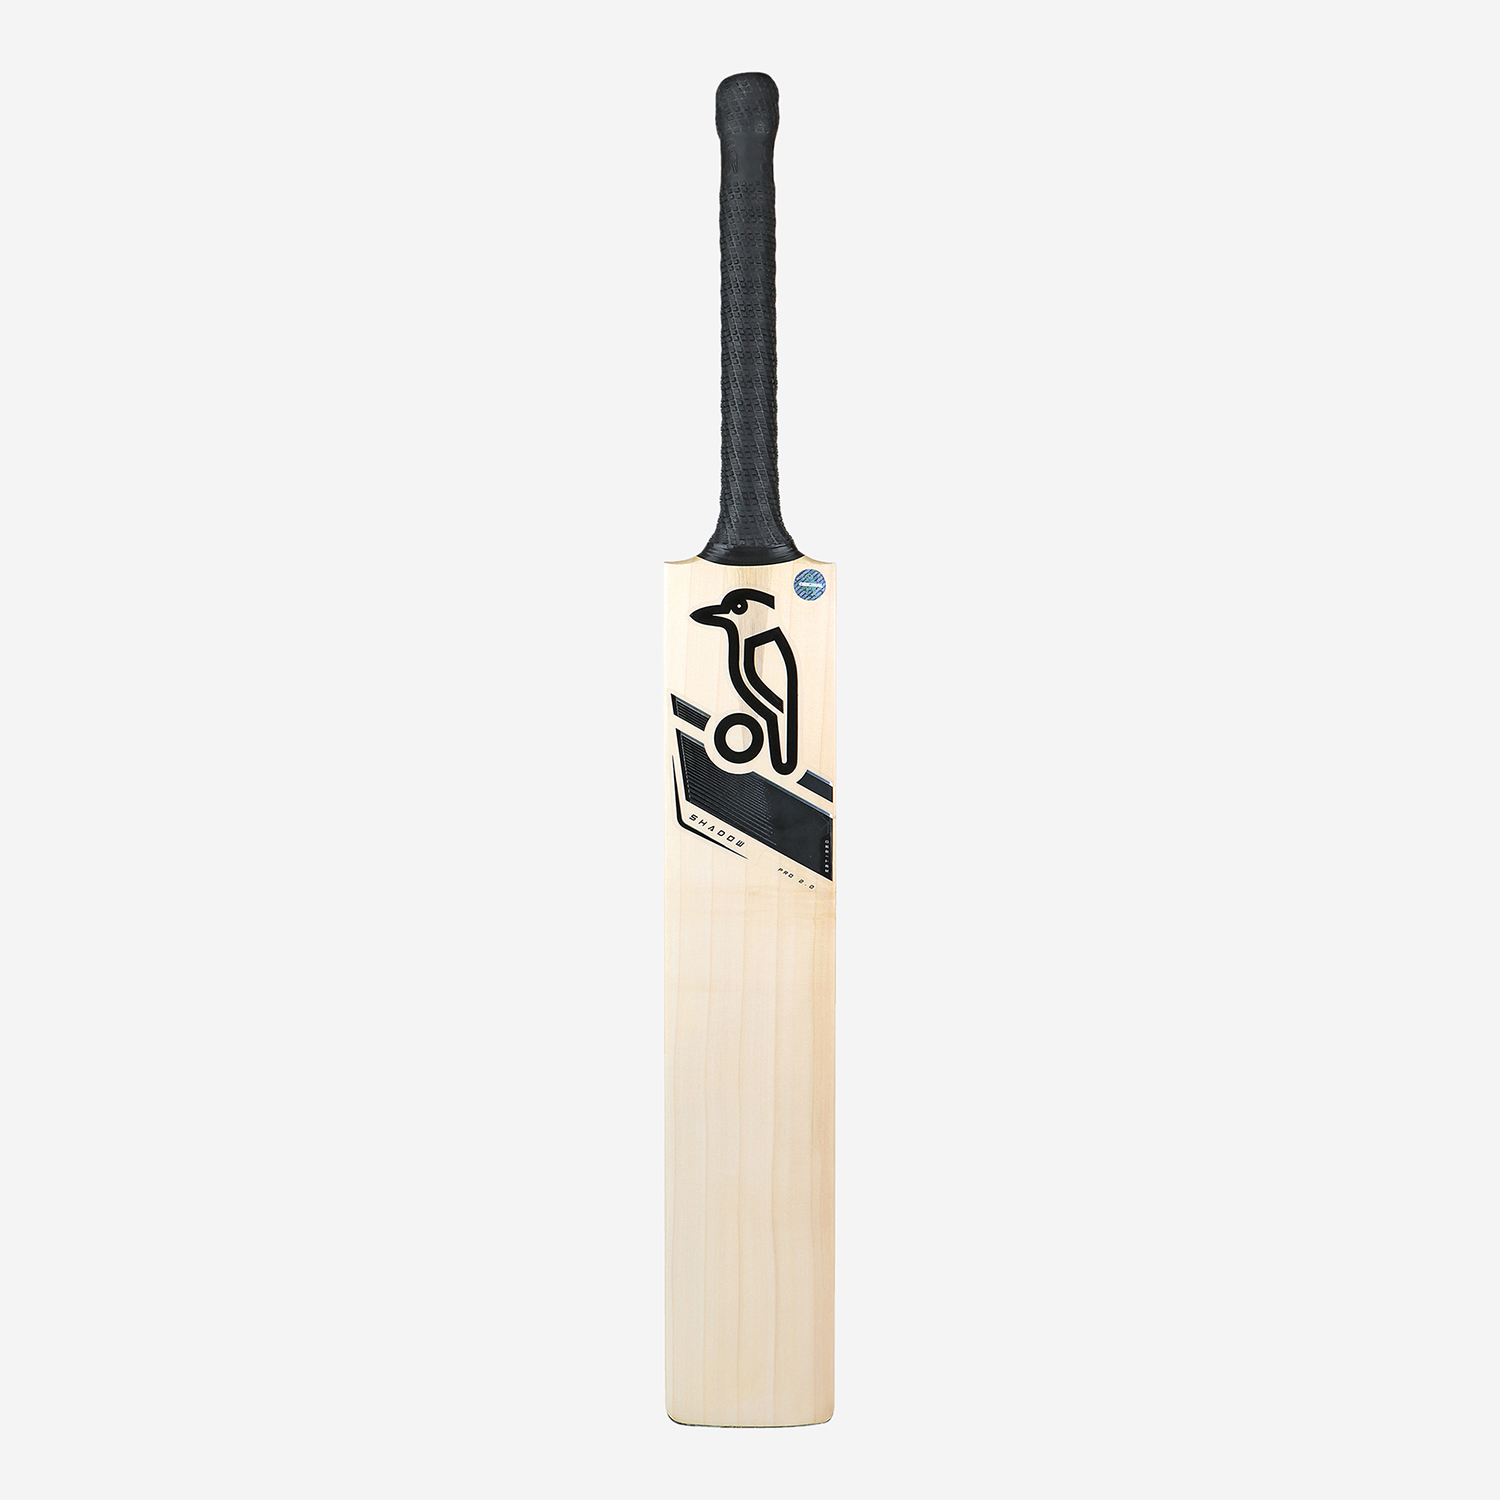 Pro 2.0 Shadow Senior Cricket Bat